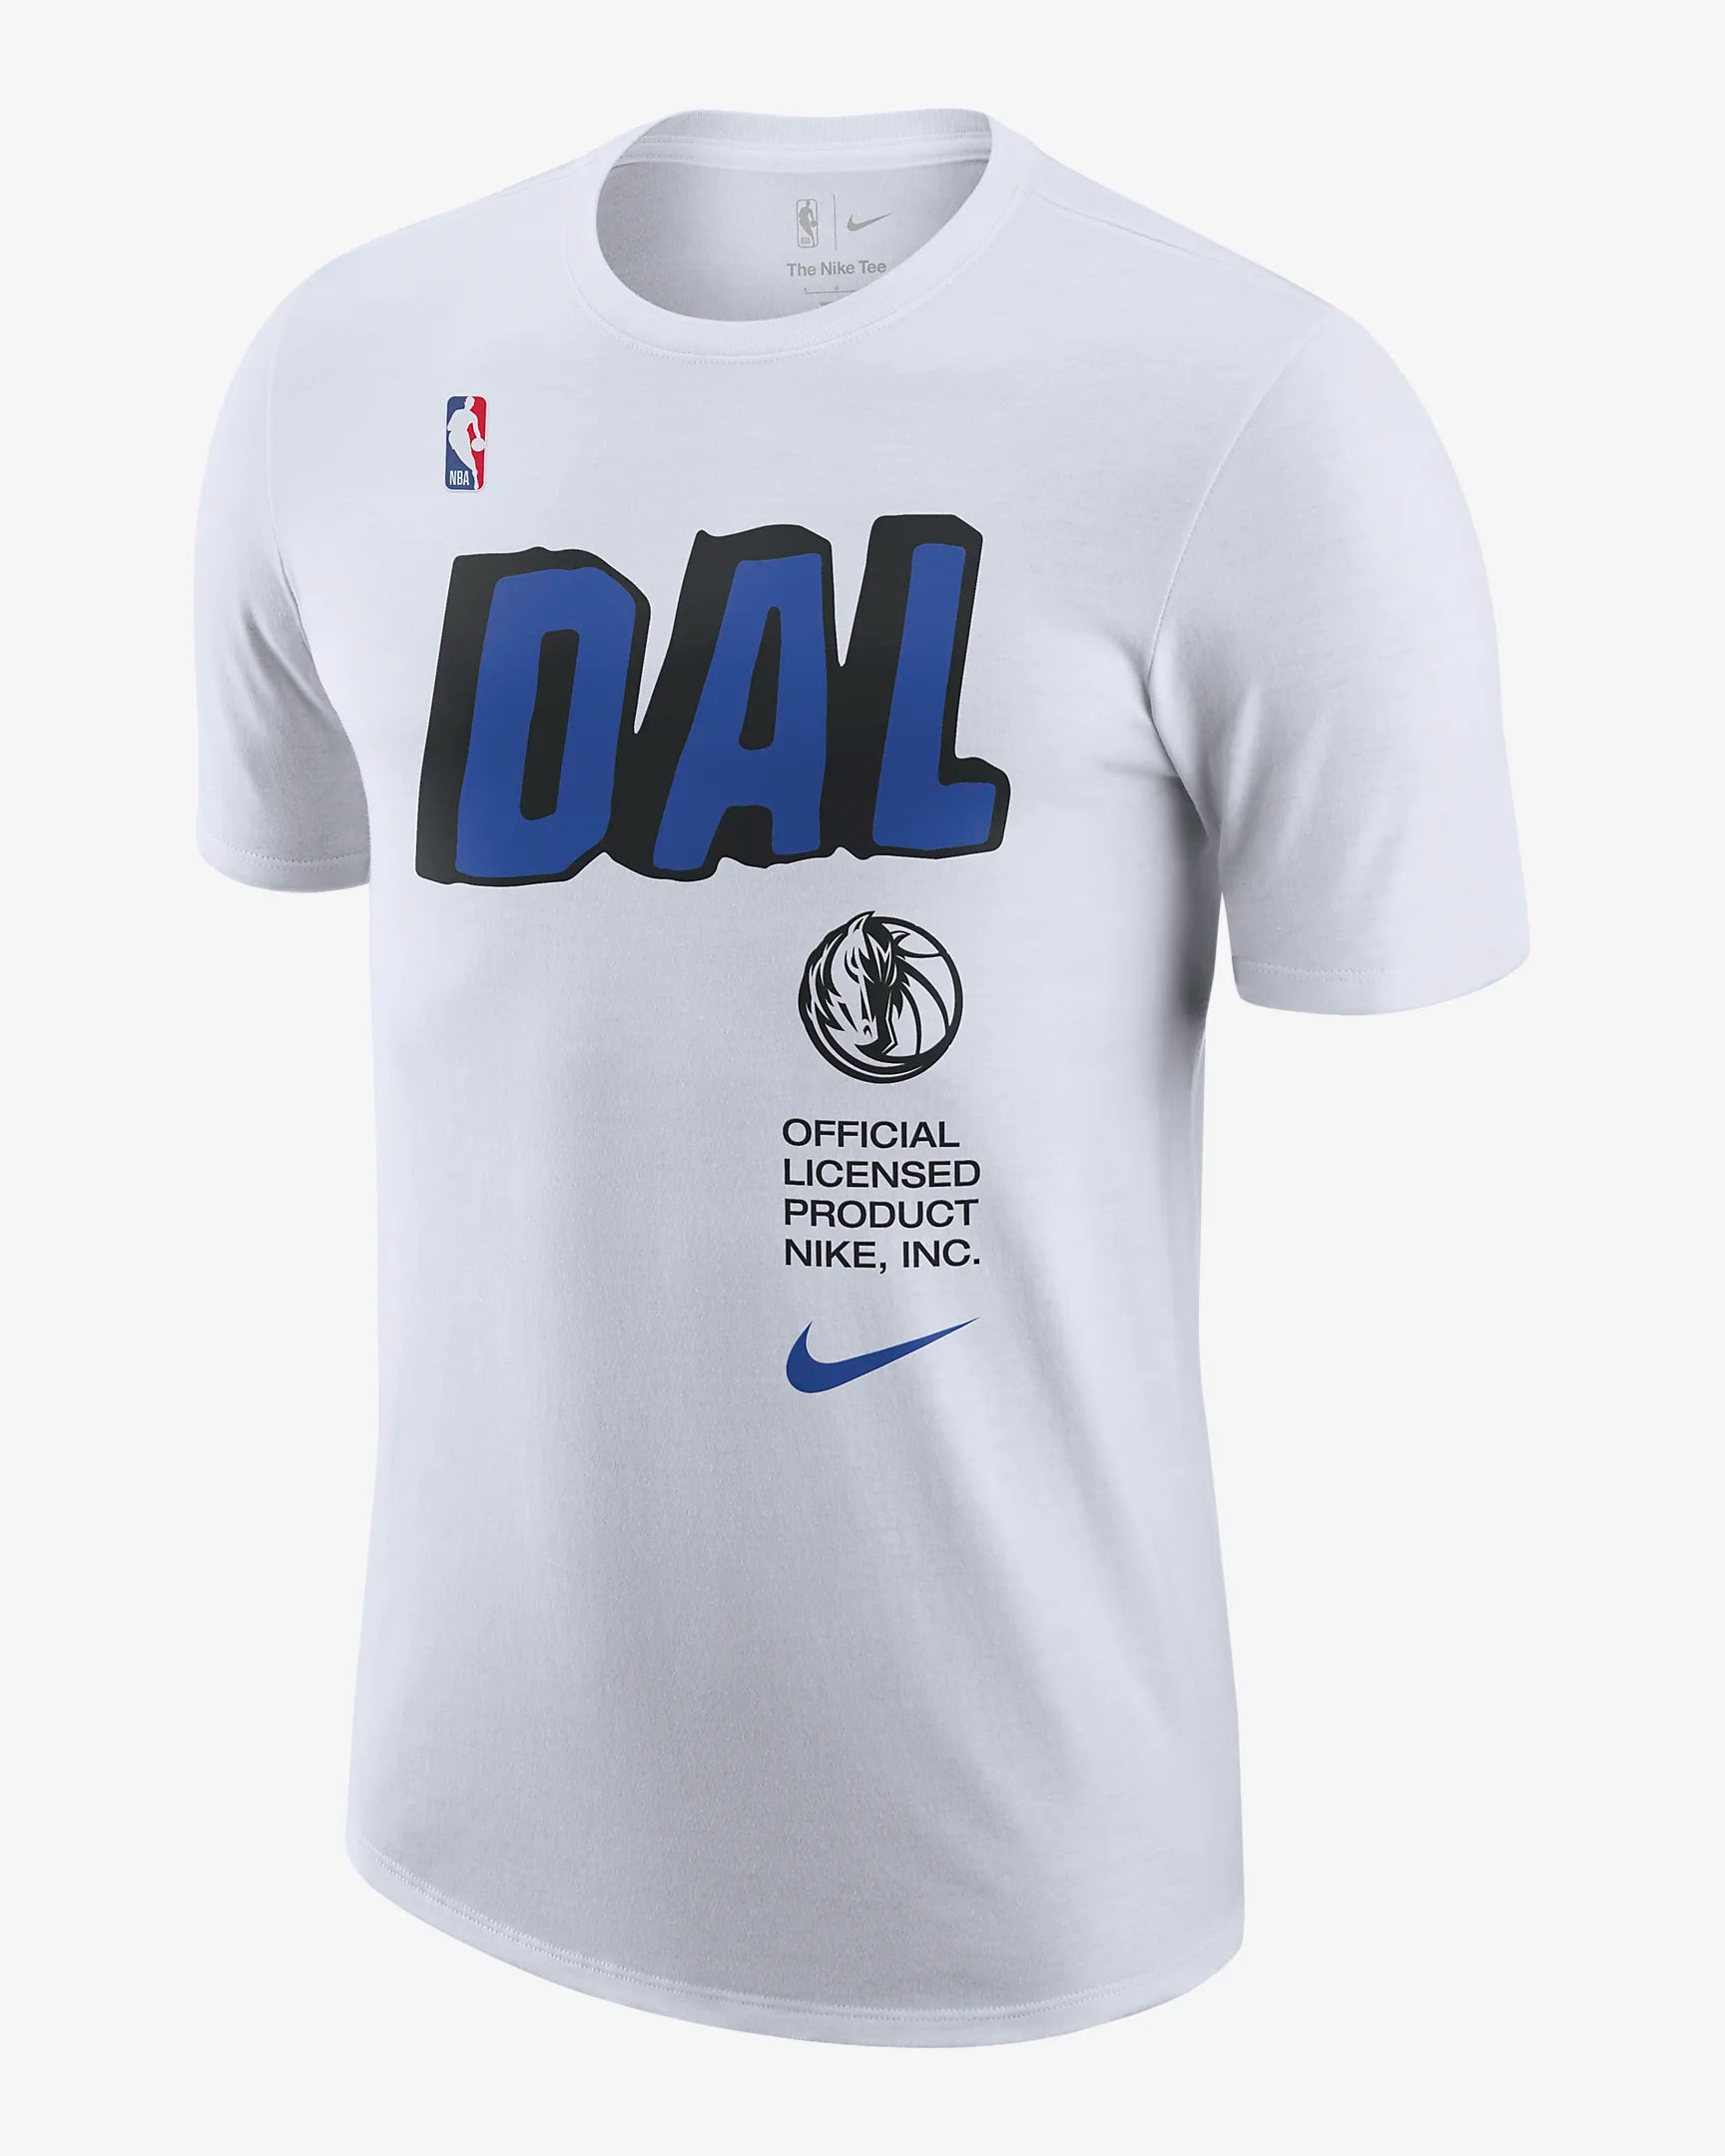 Dallas Mavericks City Edition Men's Nike NBA Long-Sleeve T-Shirt